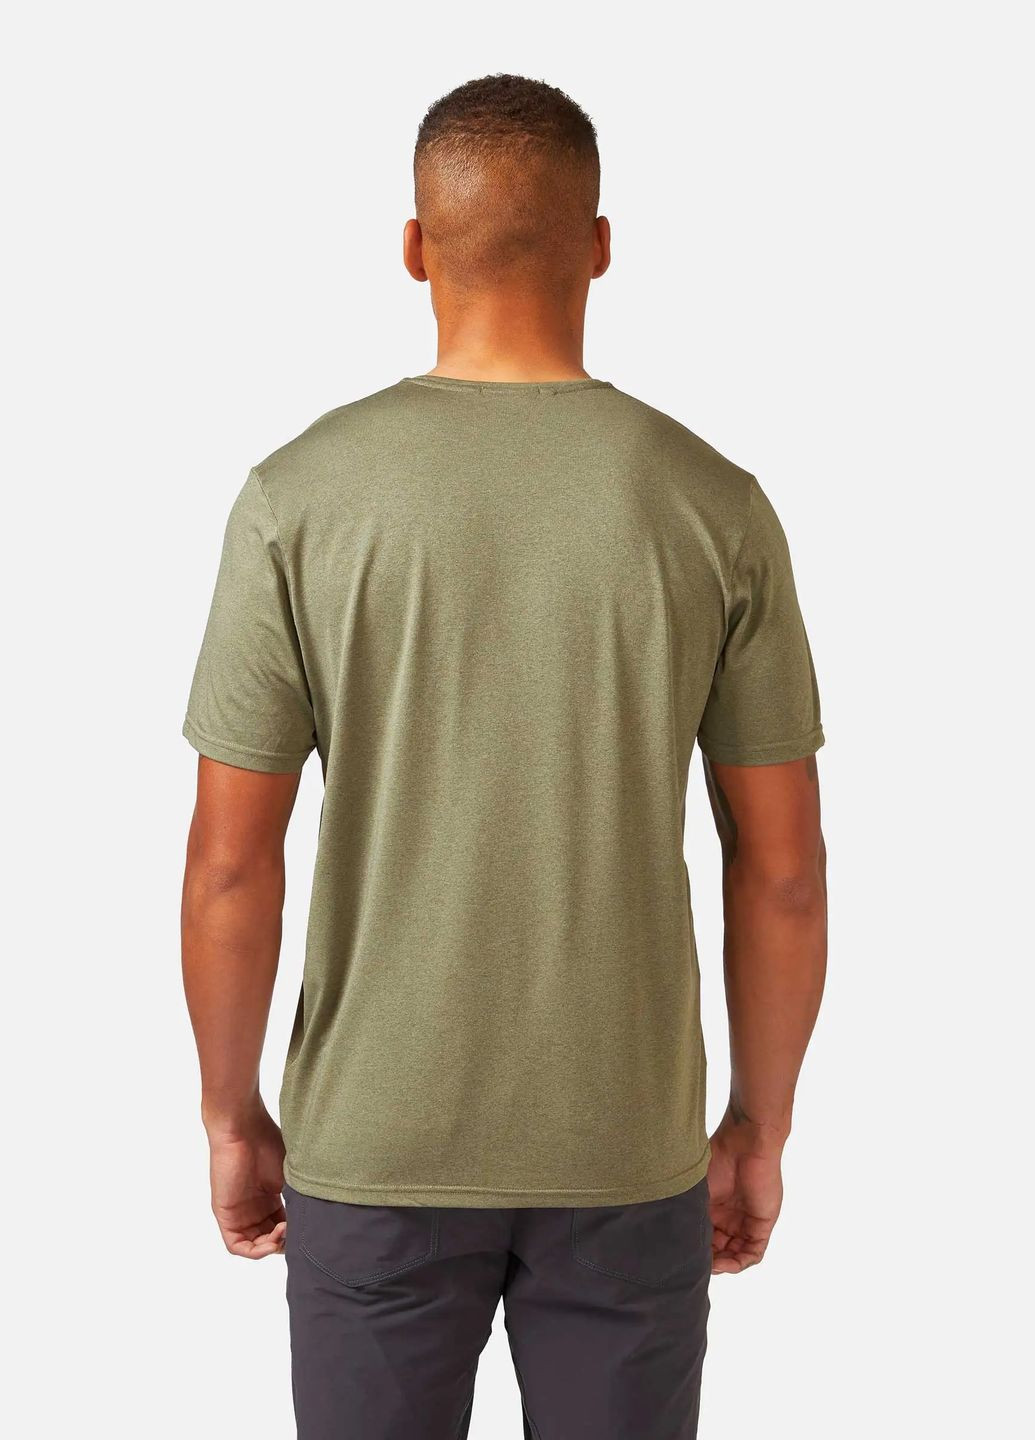 Хаки (оливковая) футболка mantle mountain tee светлый Rab